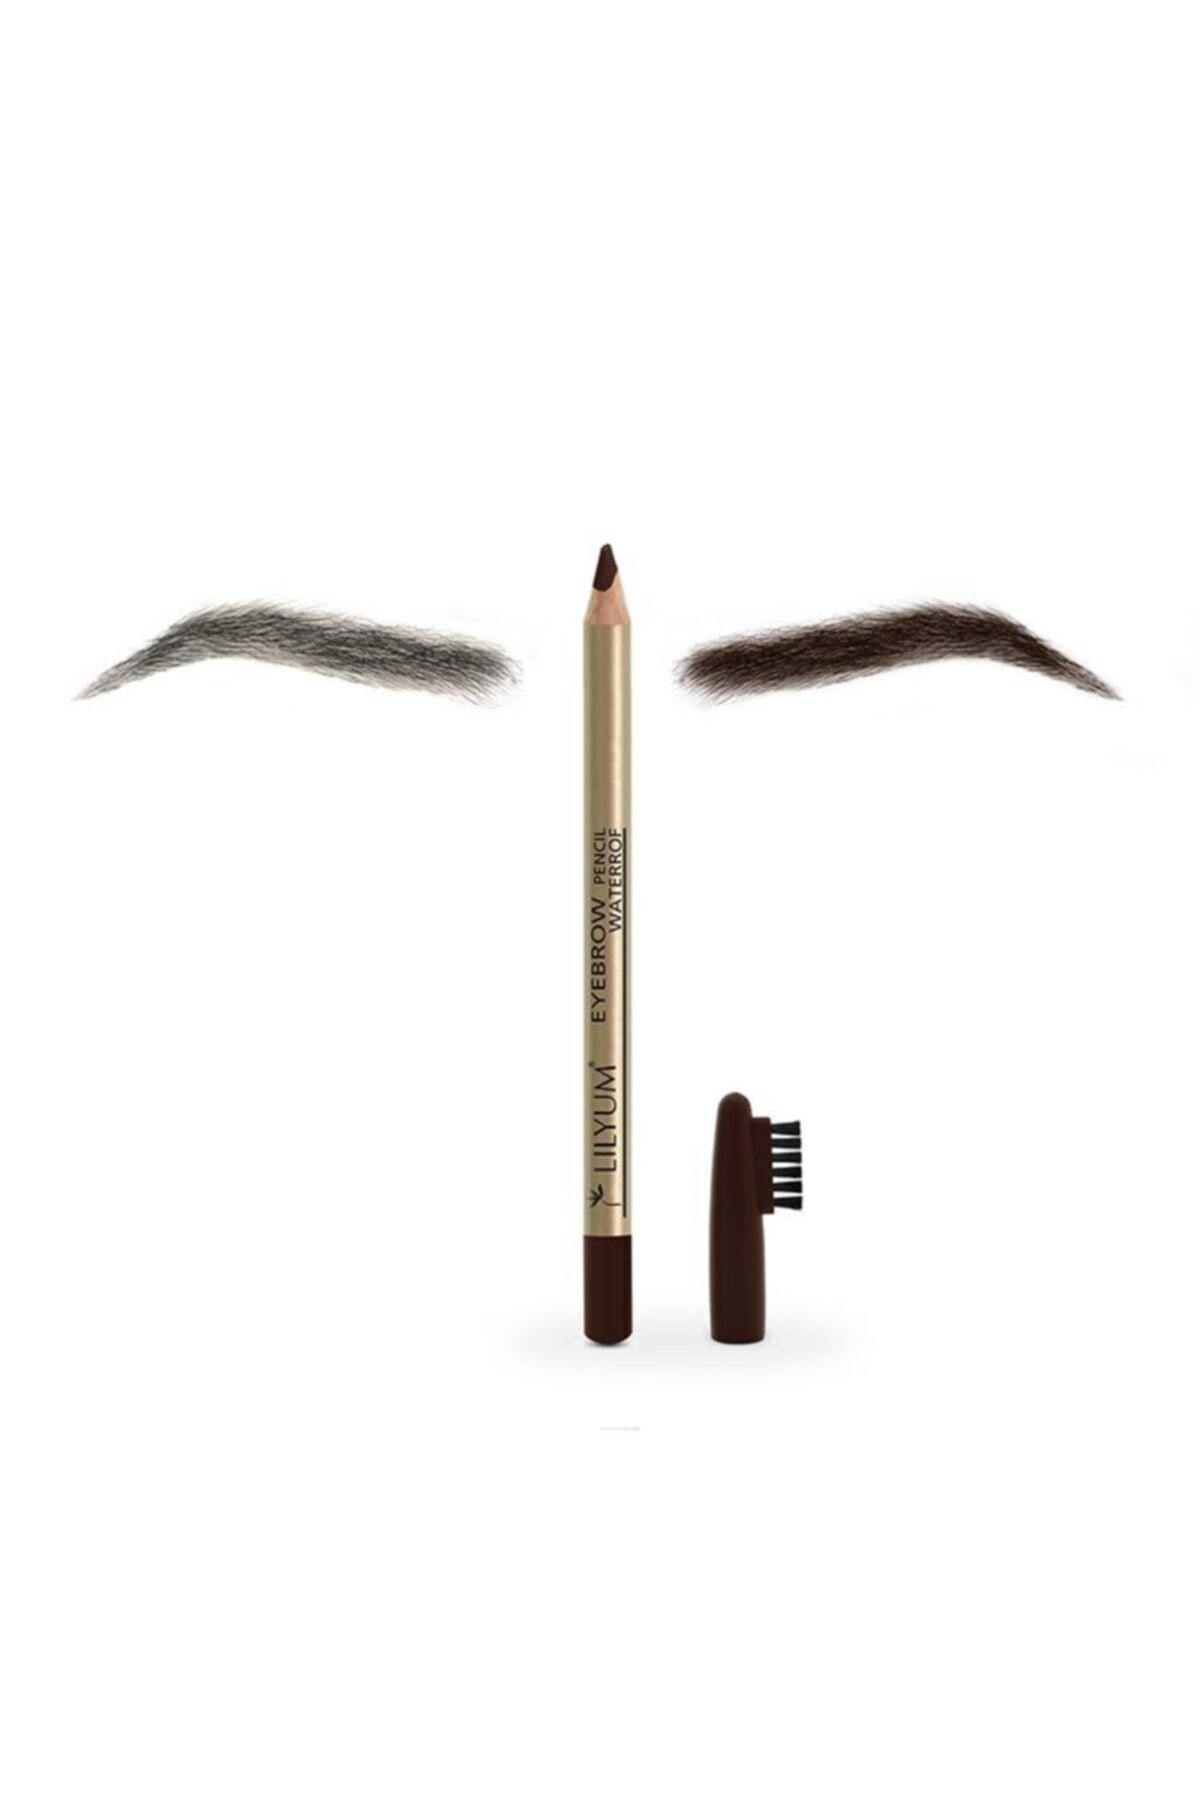 Lilyum Eyebrow Pencil - Natural Definition with Precision Brush - Shade: Medium Ash Brown (No: 113)